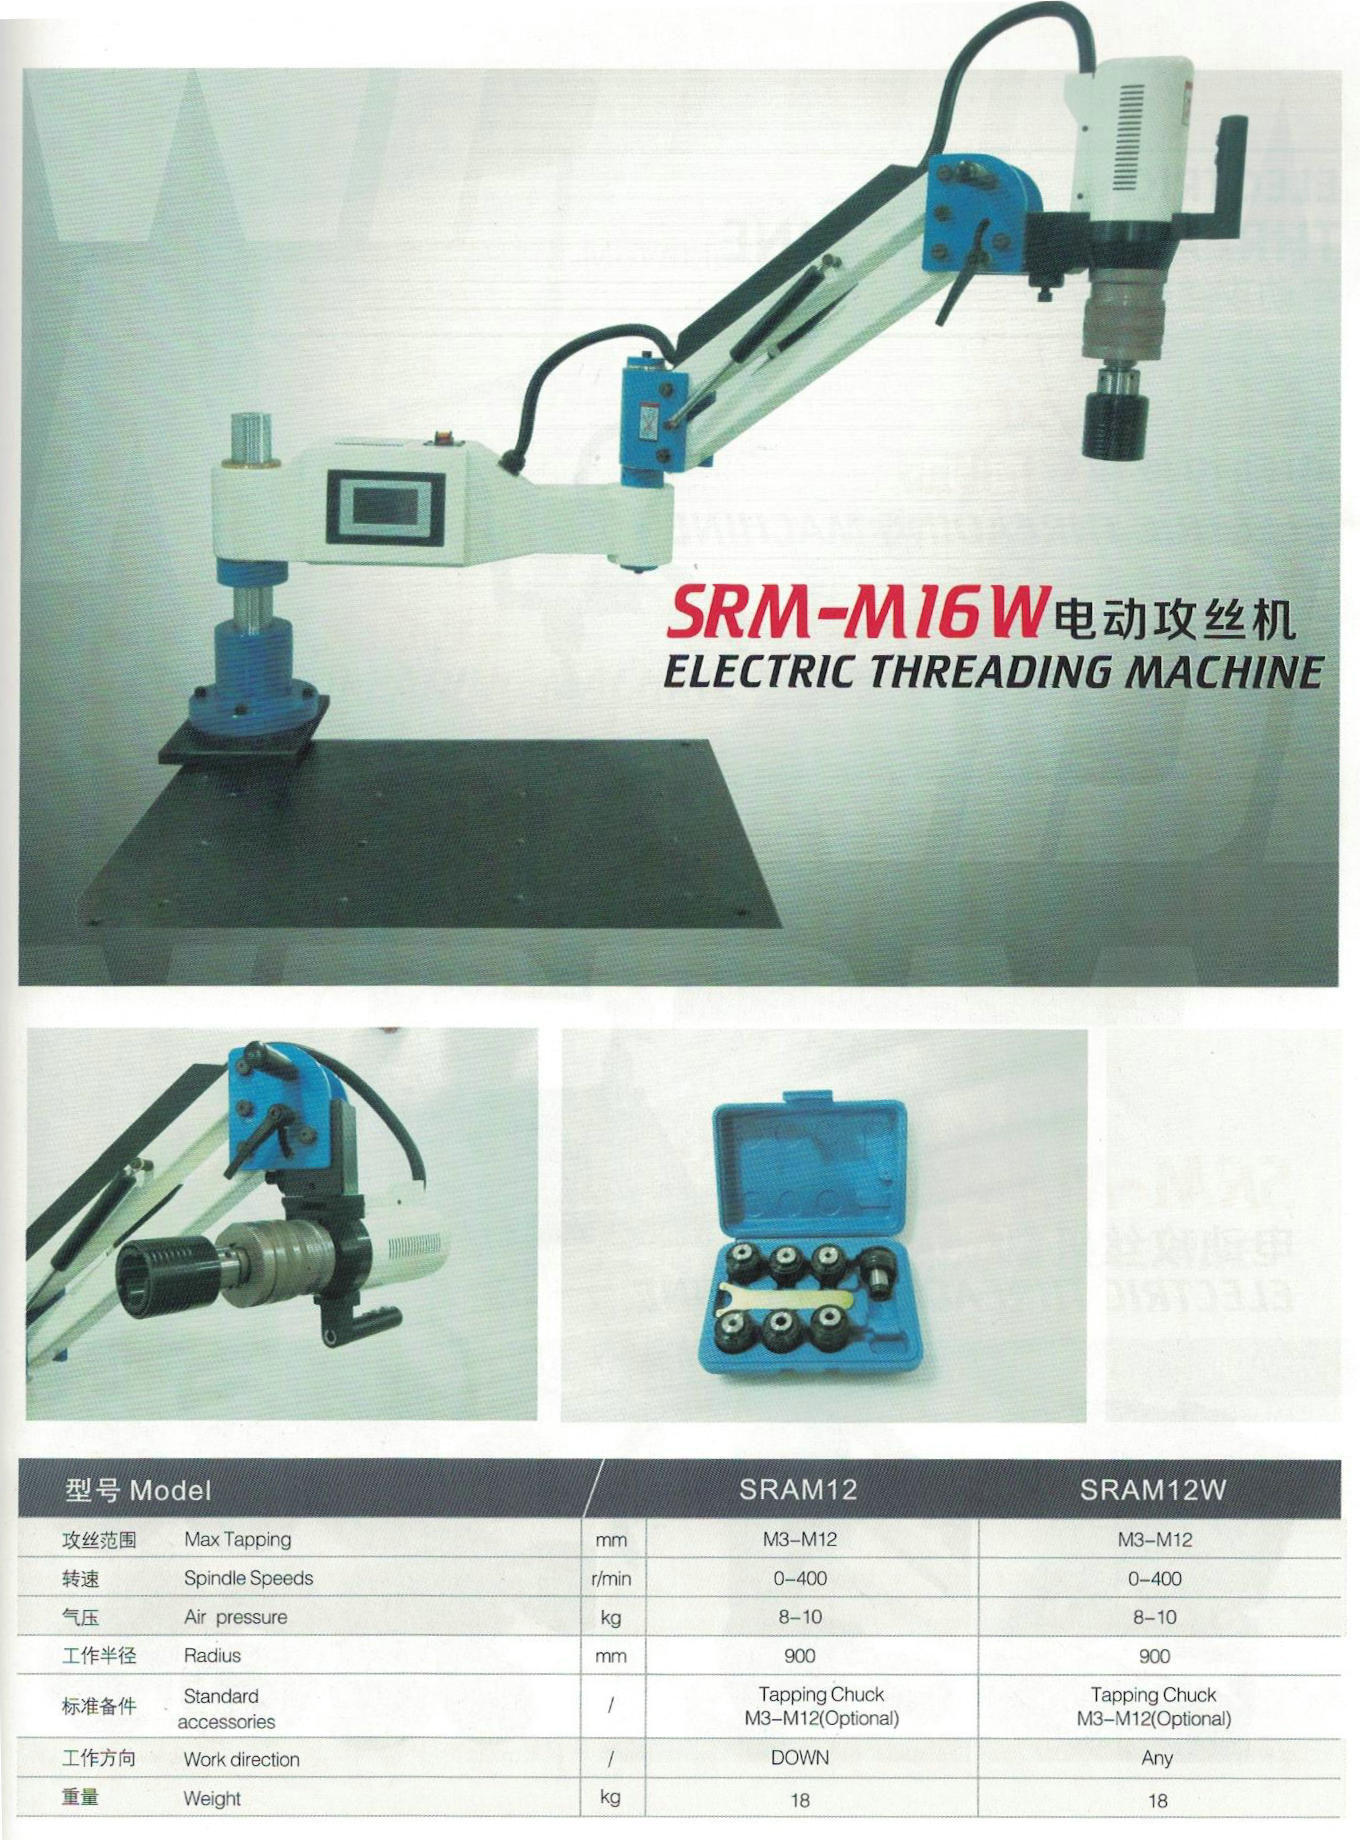 ELECTRICAL THREADING MACHINE SRAM12W